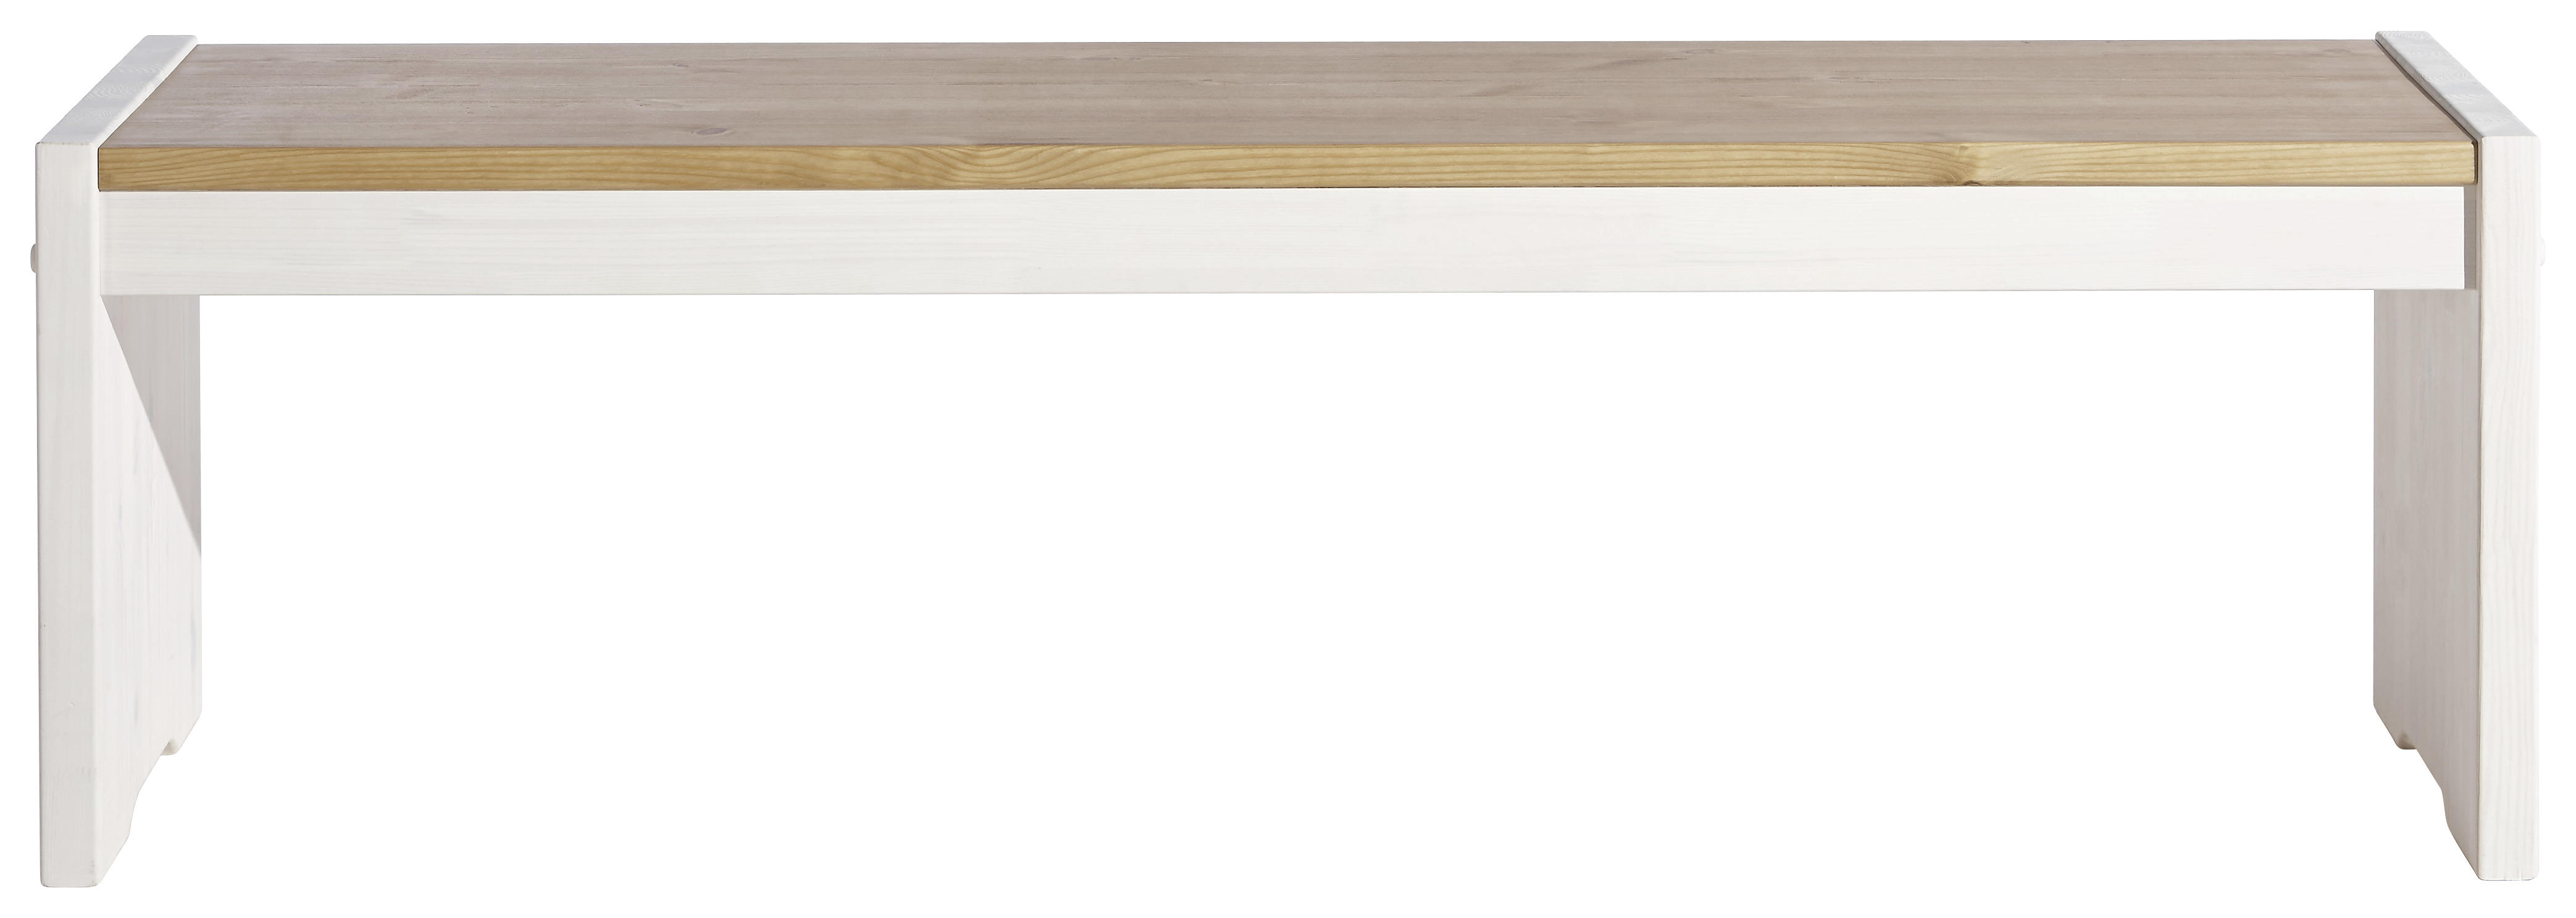 SITZBANK Kiefer massiv Weiß, Kieferfarben  - Weiß/Kieferfarben, LIFESTYLE, Holz (160/48/40cm) - Carryhome